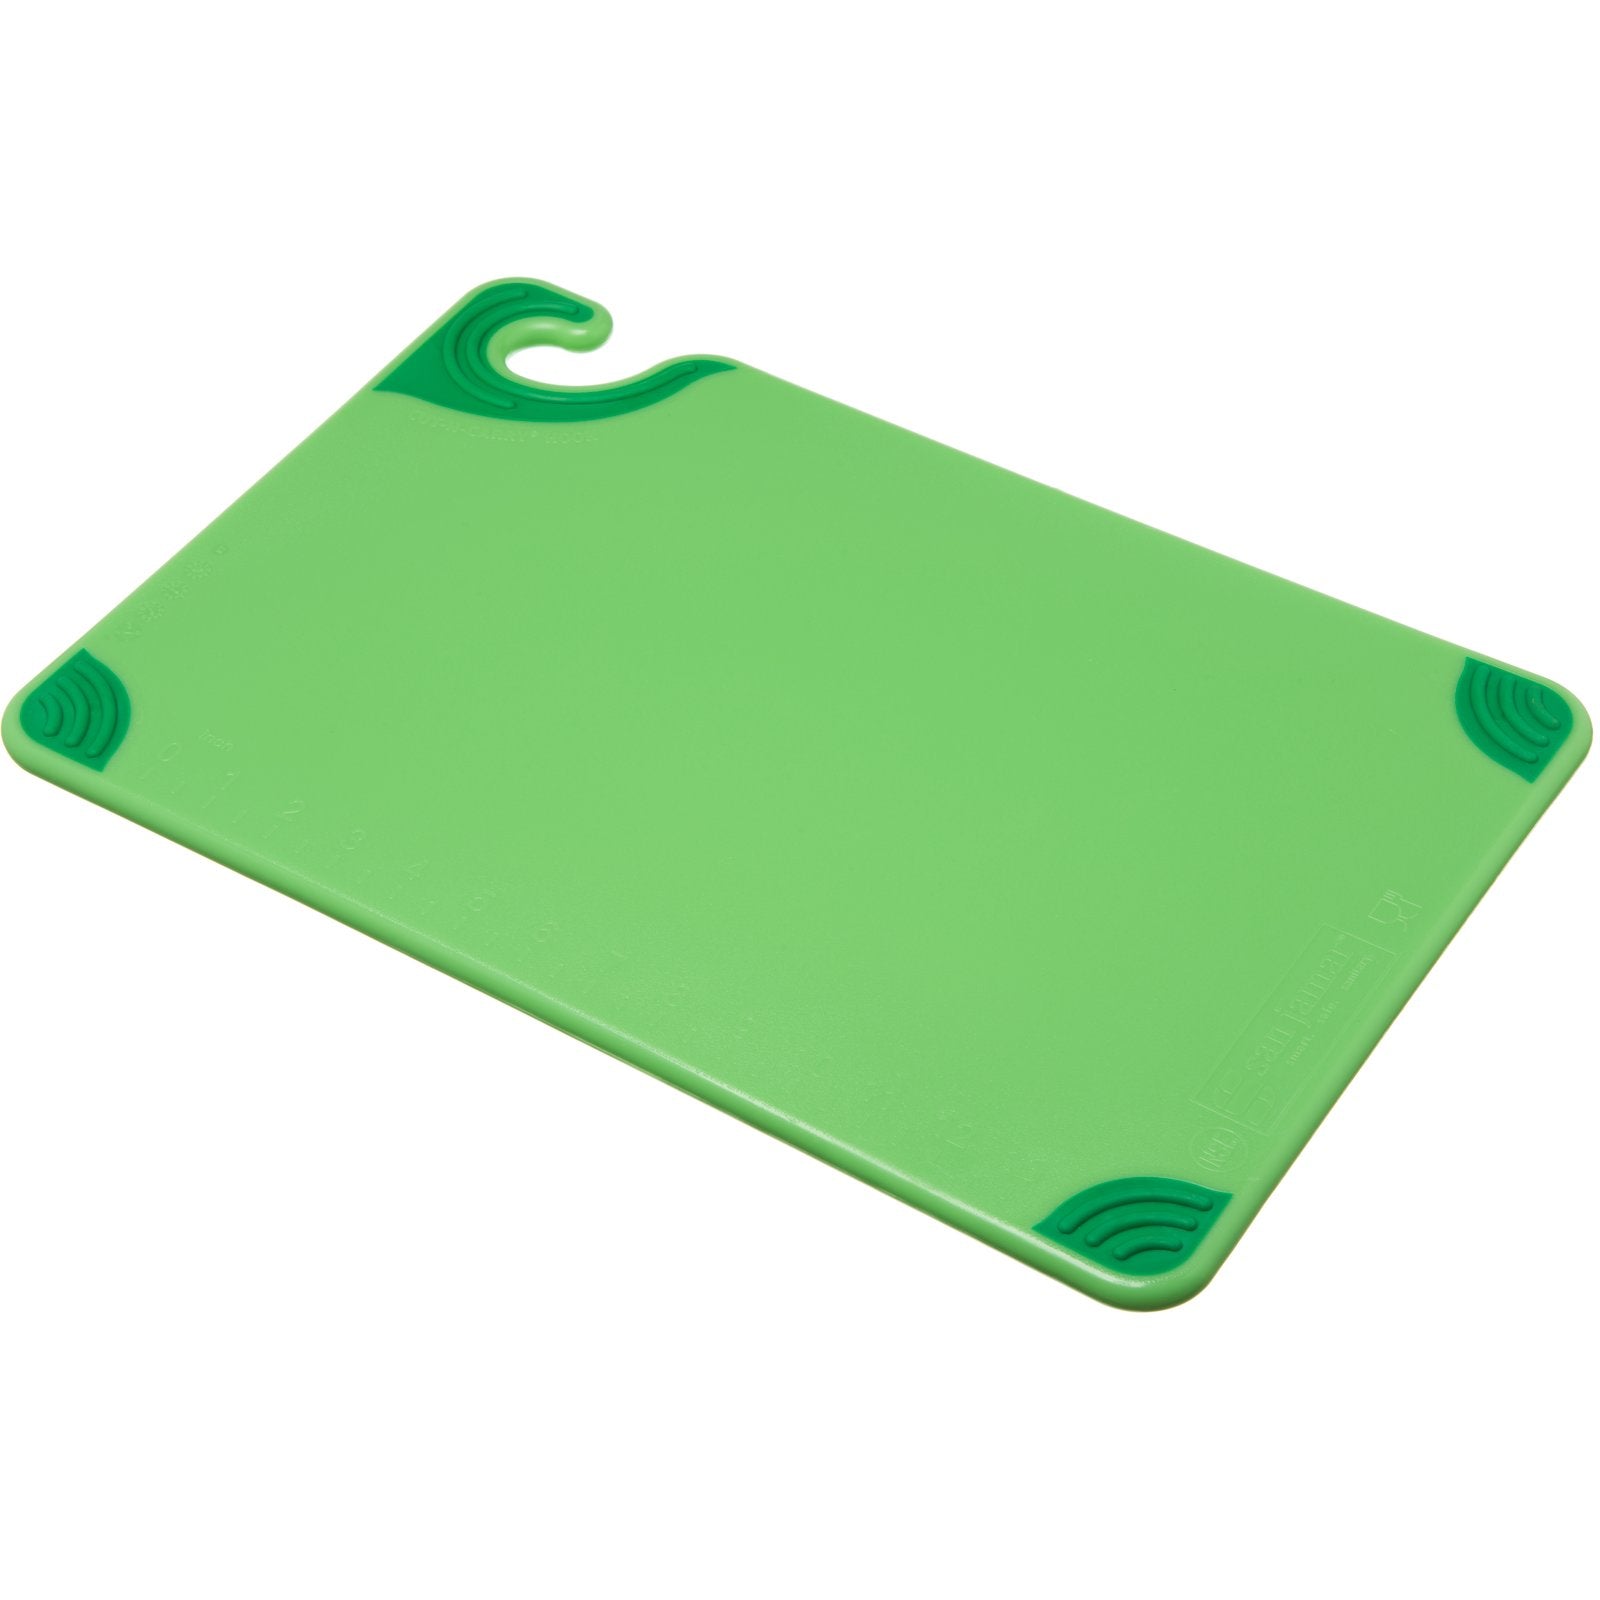 San Jamar CBG121812GN Saf-T-Grip 12 x 18 Green Cutting Board